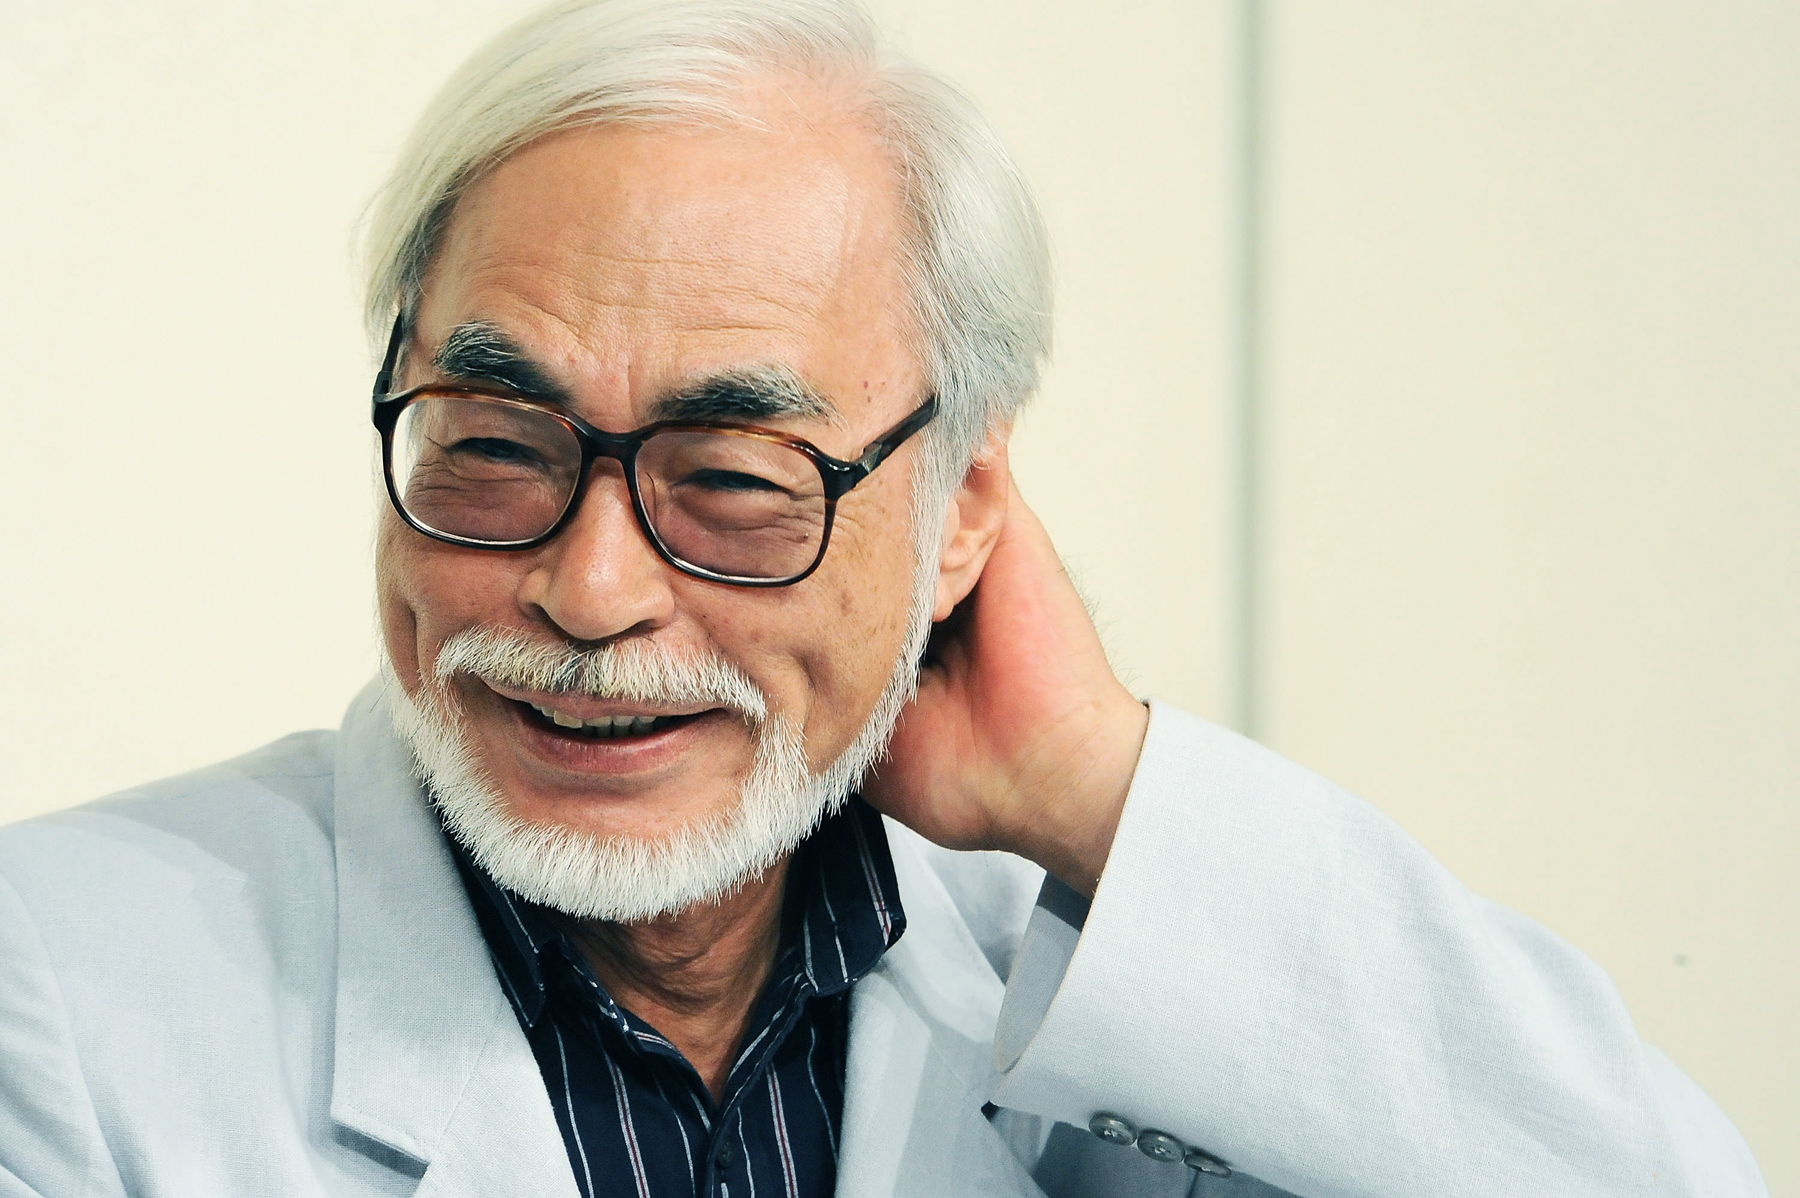 688160 descargar imagen hayao miyazaki, celebridades: fondos de pantalla y protectores de pantalla gratis